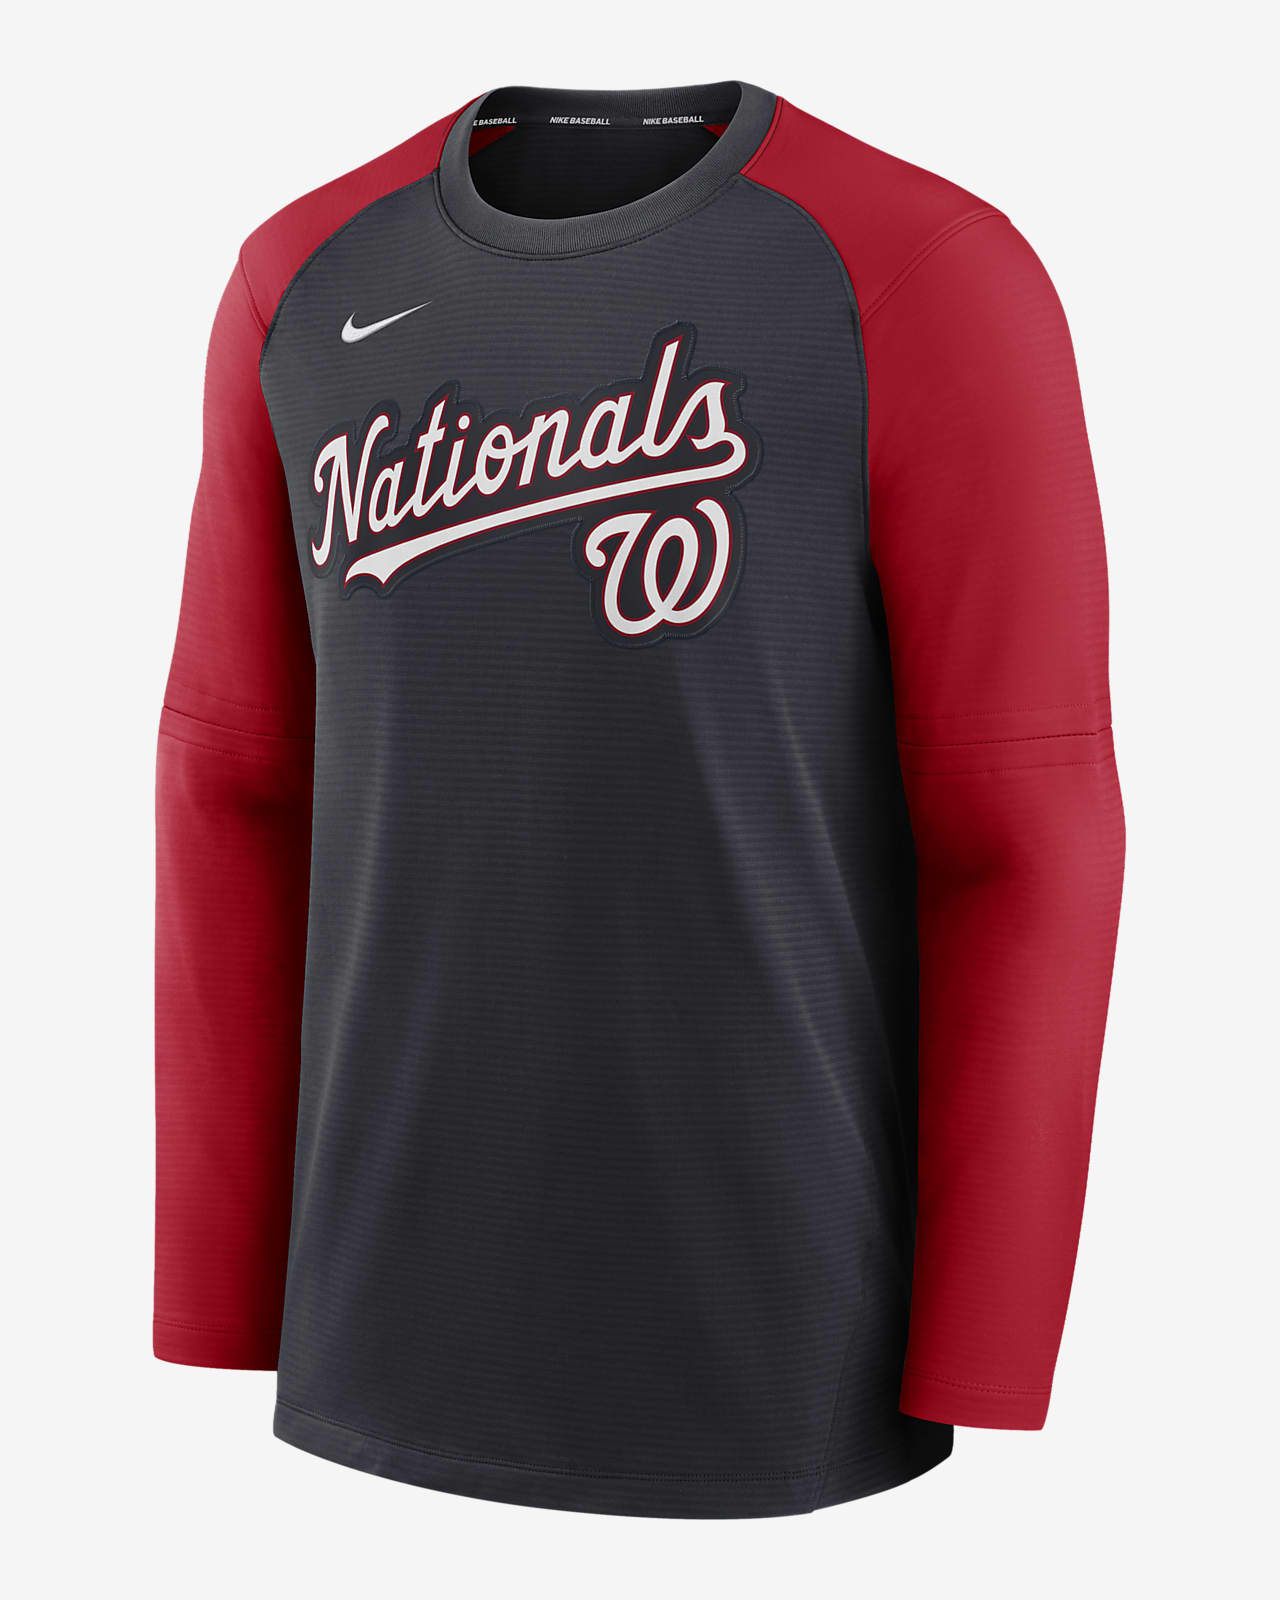 Nike Dri-FIT Pregame (MLB Washington Nationals) Men's Long-Sleeve Top.